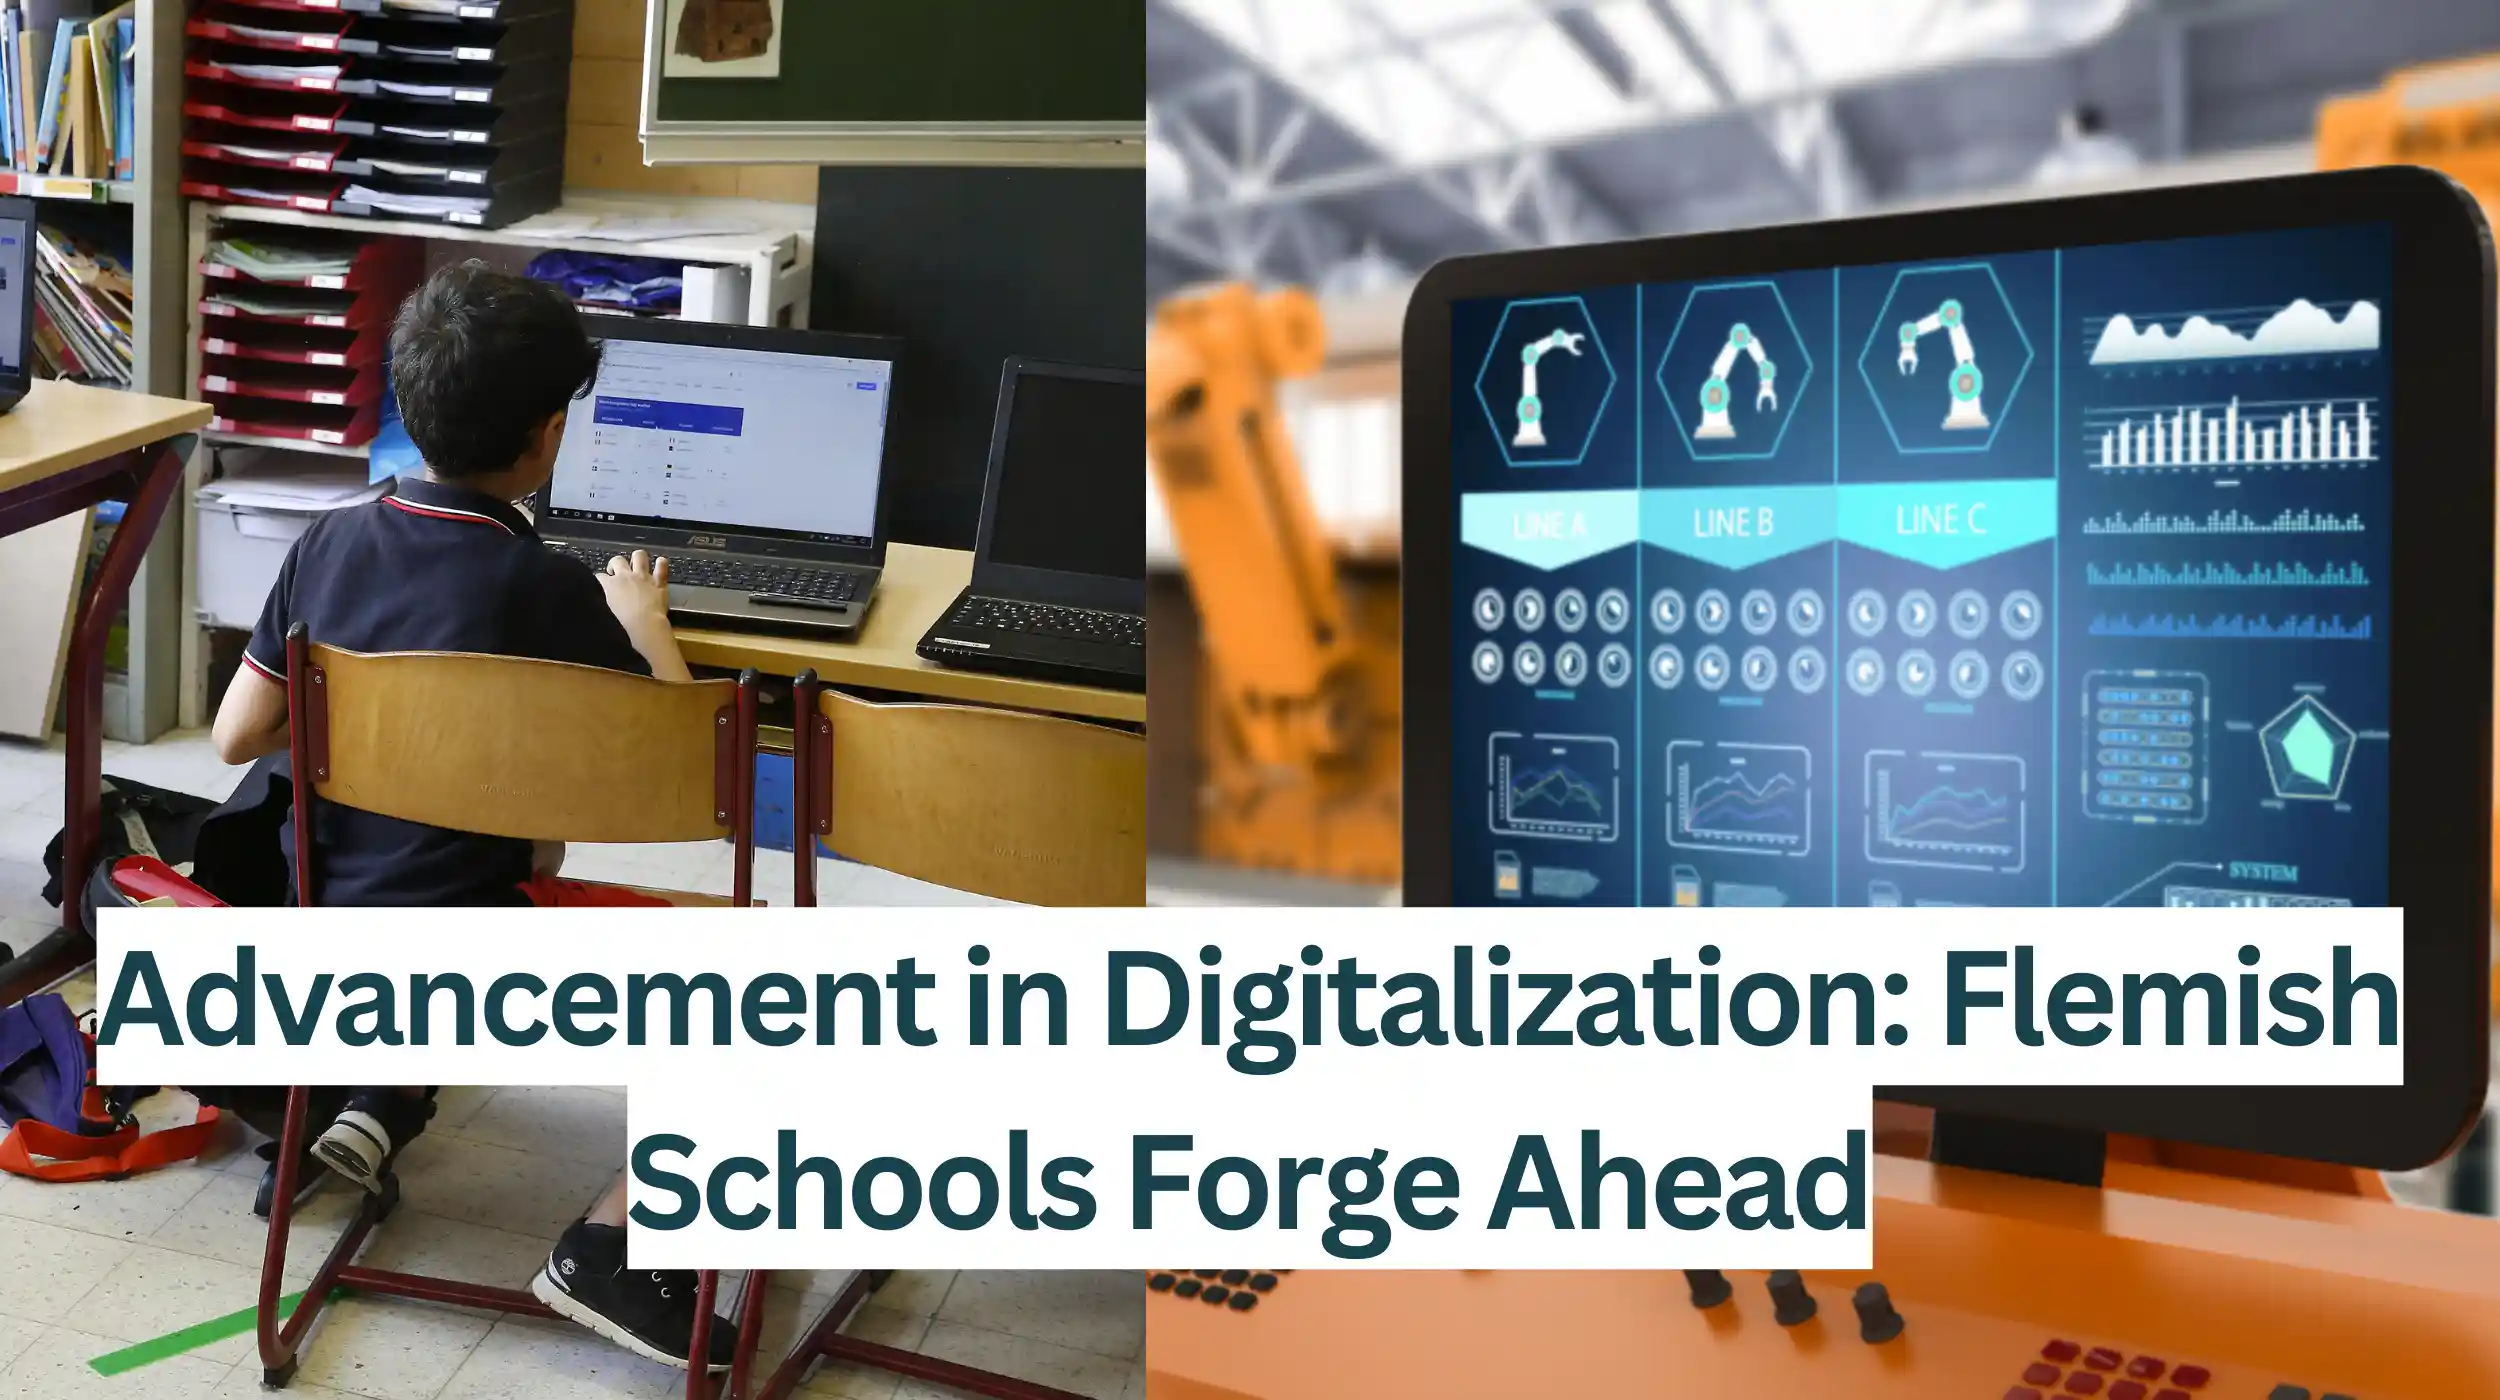 Advancement-in-Digitalization-Flemish-Schools-Forge-Ahead